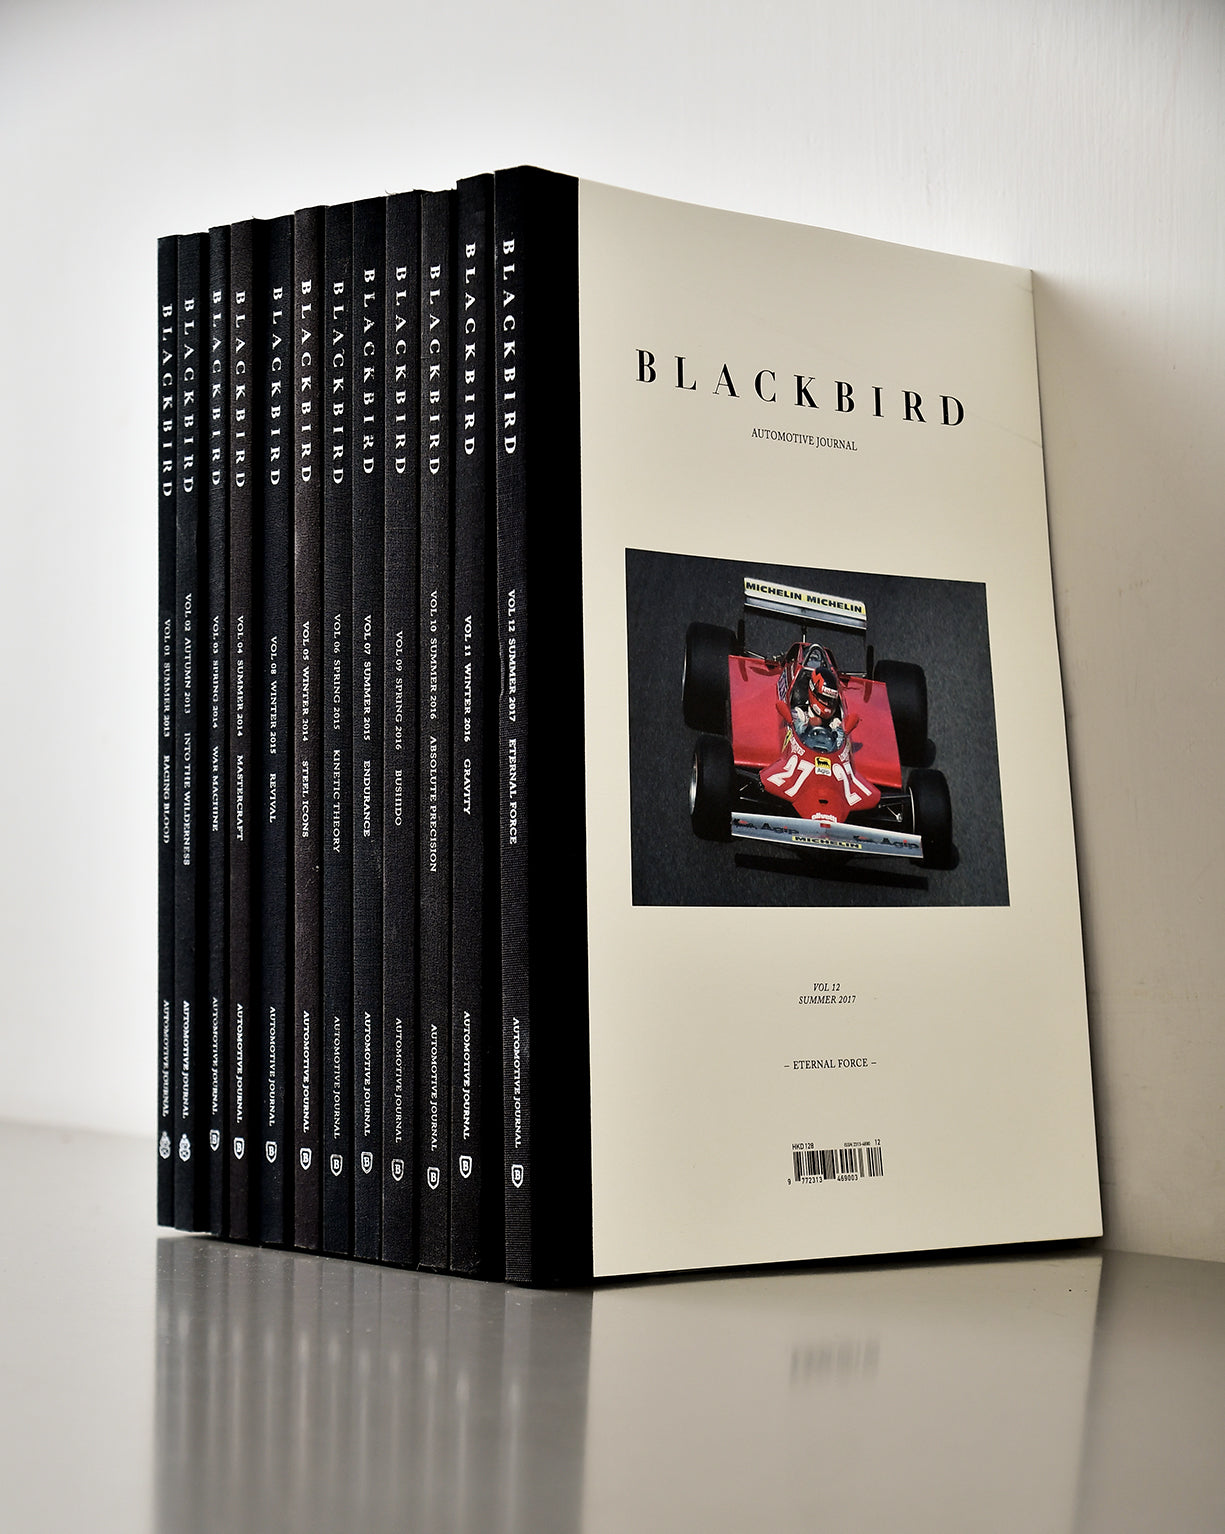 Blackbird Automotive Journal Vol 1-12